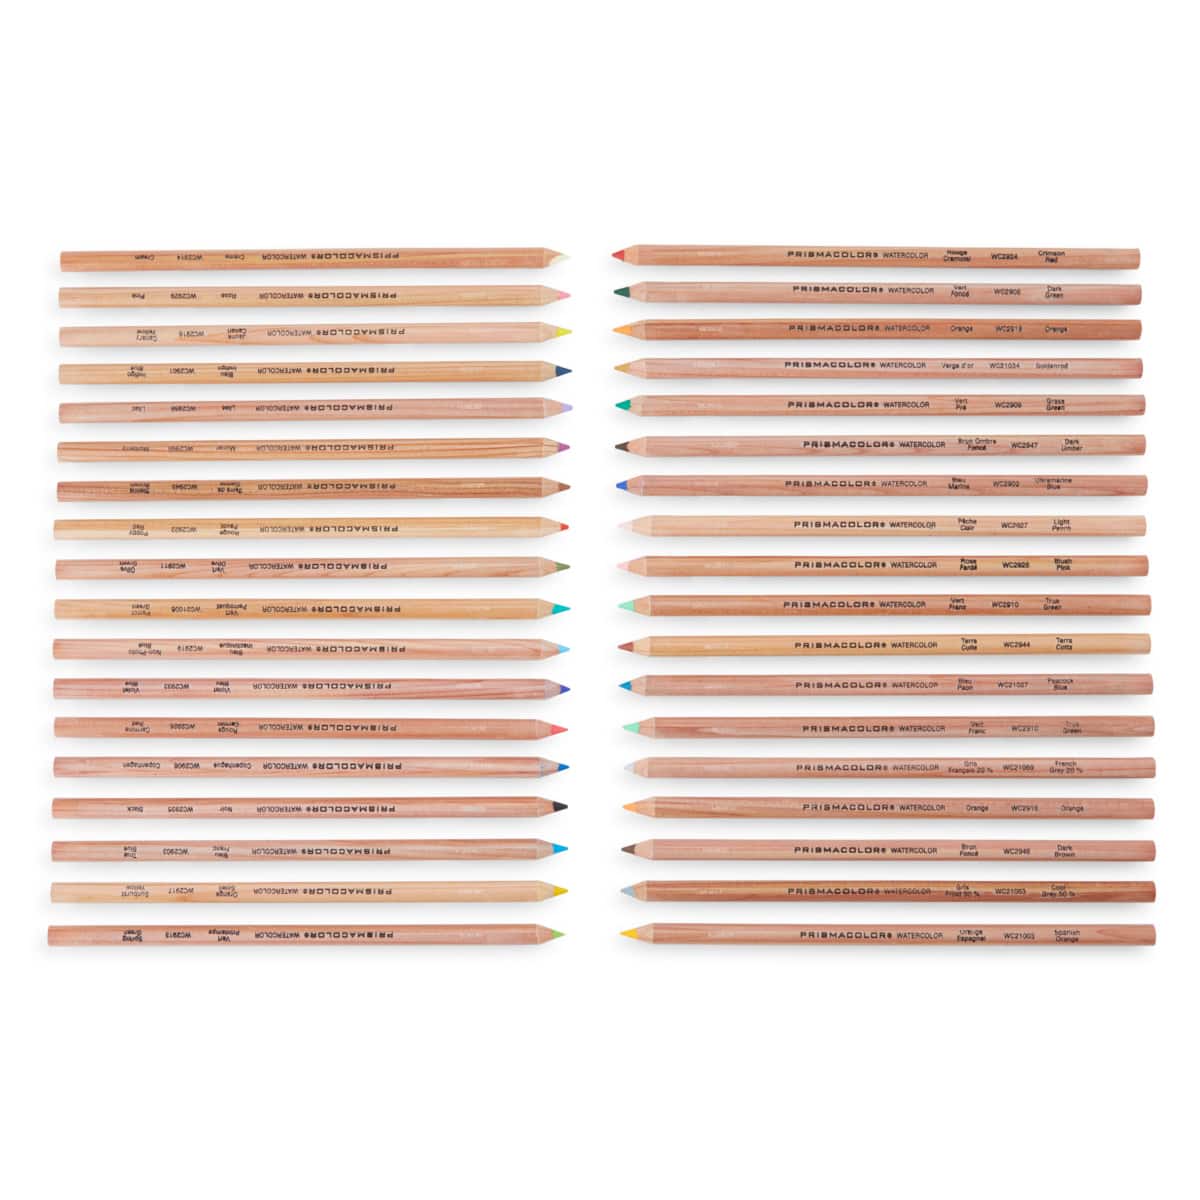  Prismacolor Premier Color Pencils, Water-Soluble Color Pencil  Set, Assorted Colors, 36 Count : Wood Colored Pencils : Office Products